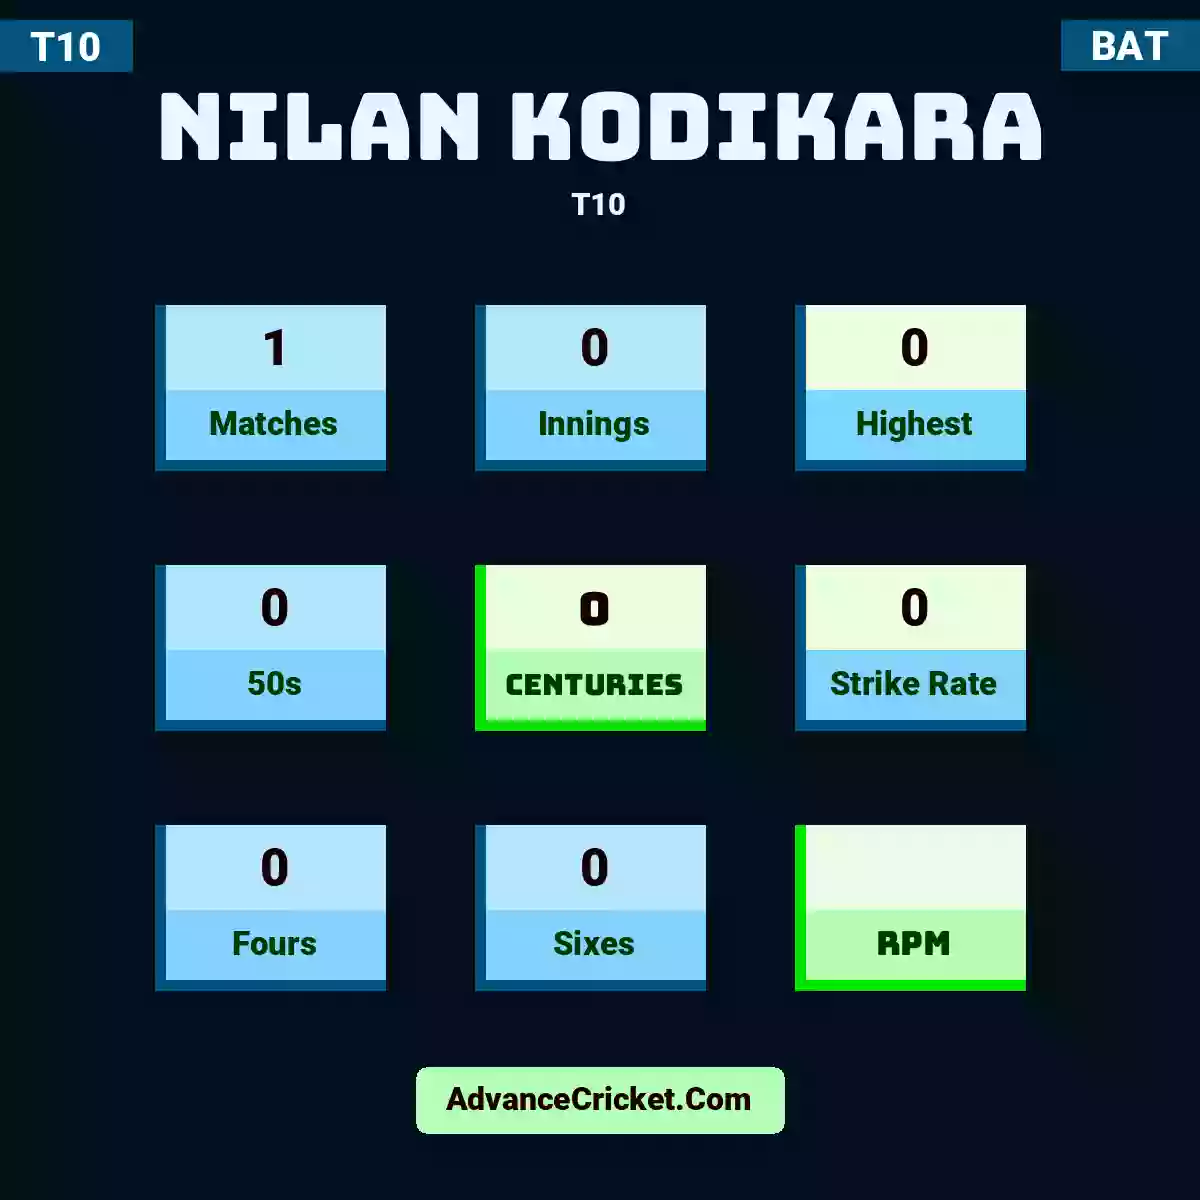 Nilan Kodikara T10 , Nilan Kodikara played 1 matches, scored 0 runs as highest, 0 half-centuries, and 0 centuries, with a strike rate of 0. N.Kodikara hit 0 fours and 0 sixes.